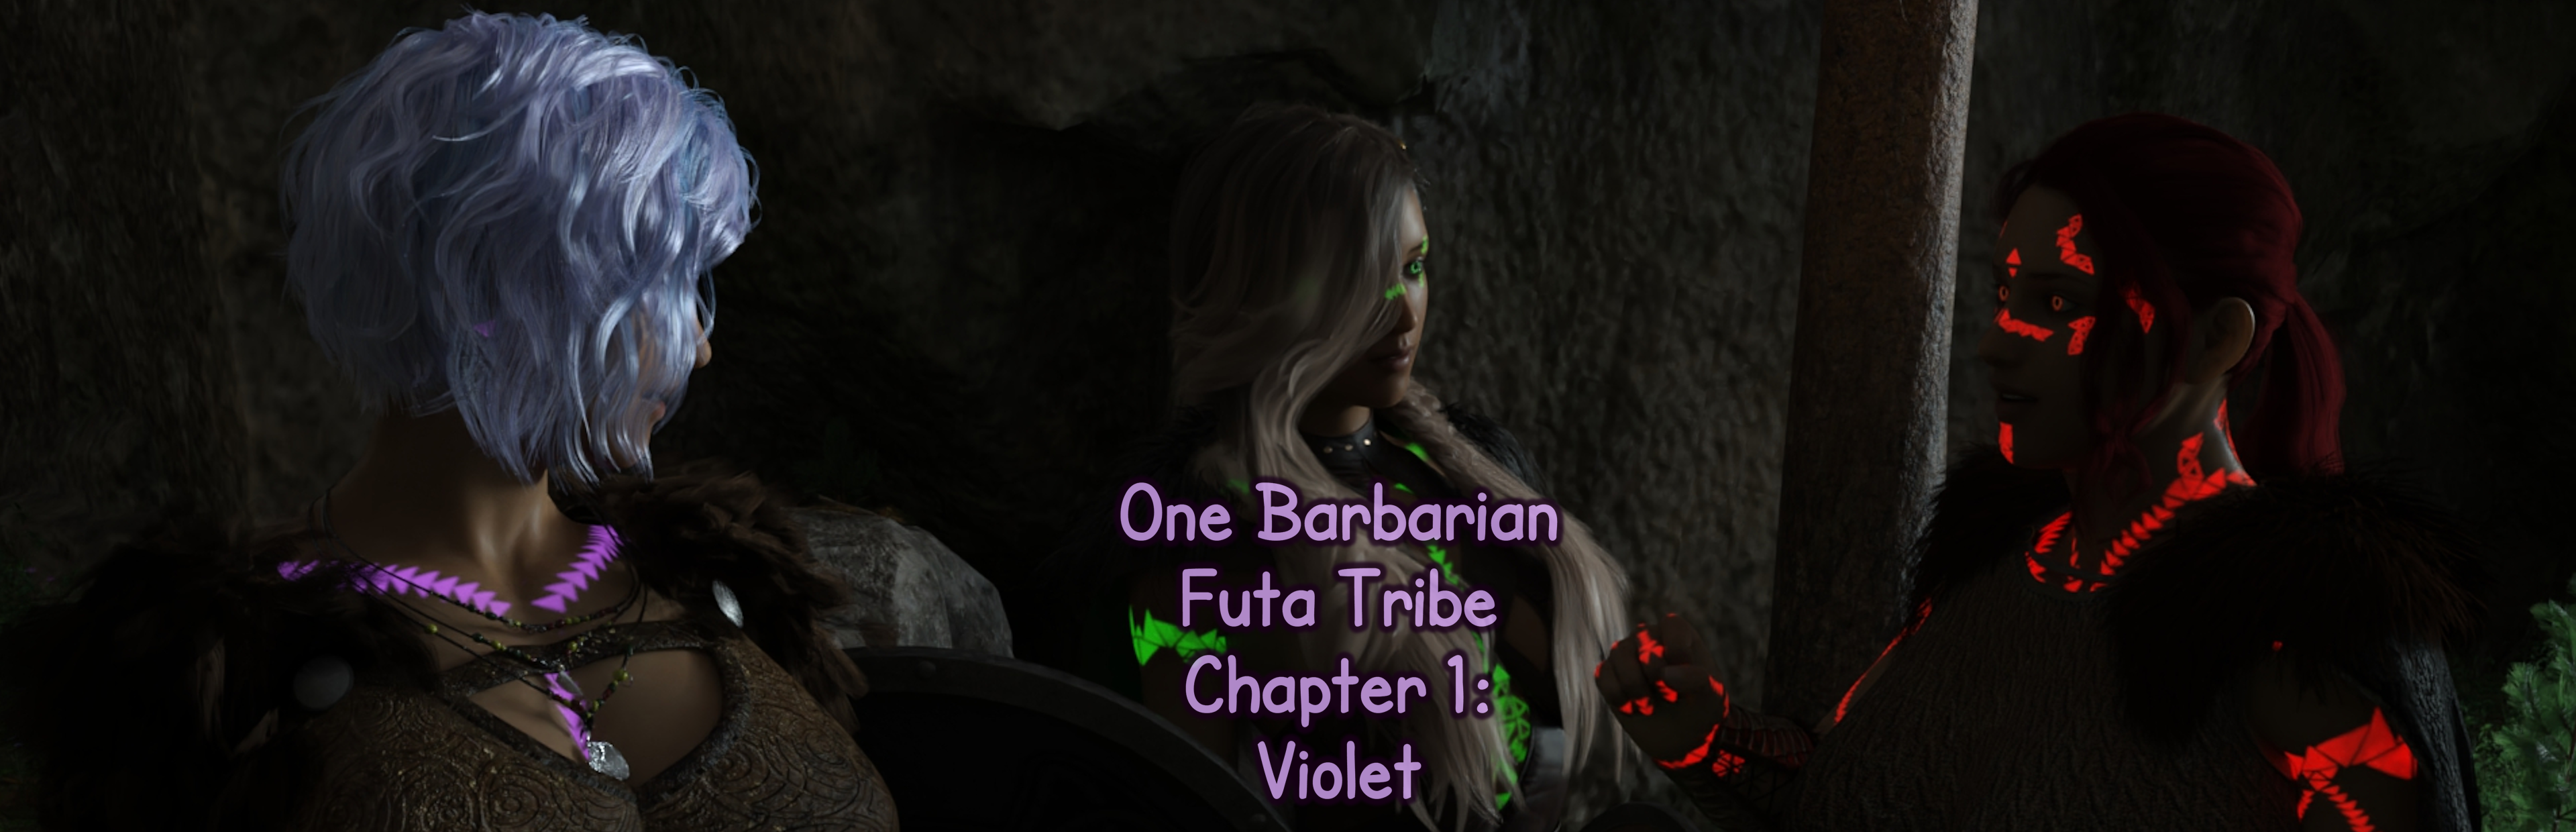 One Barbarian Futa Tribe1.png